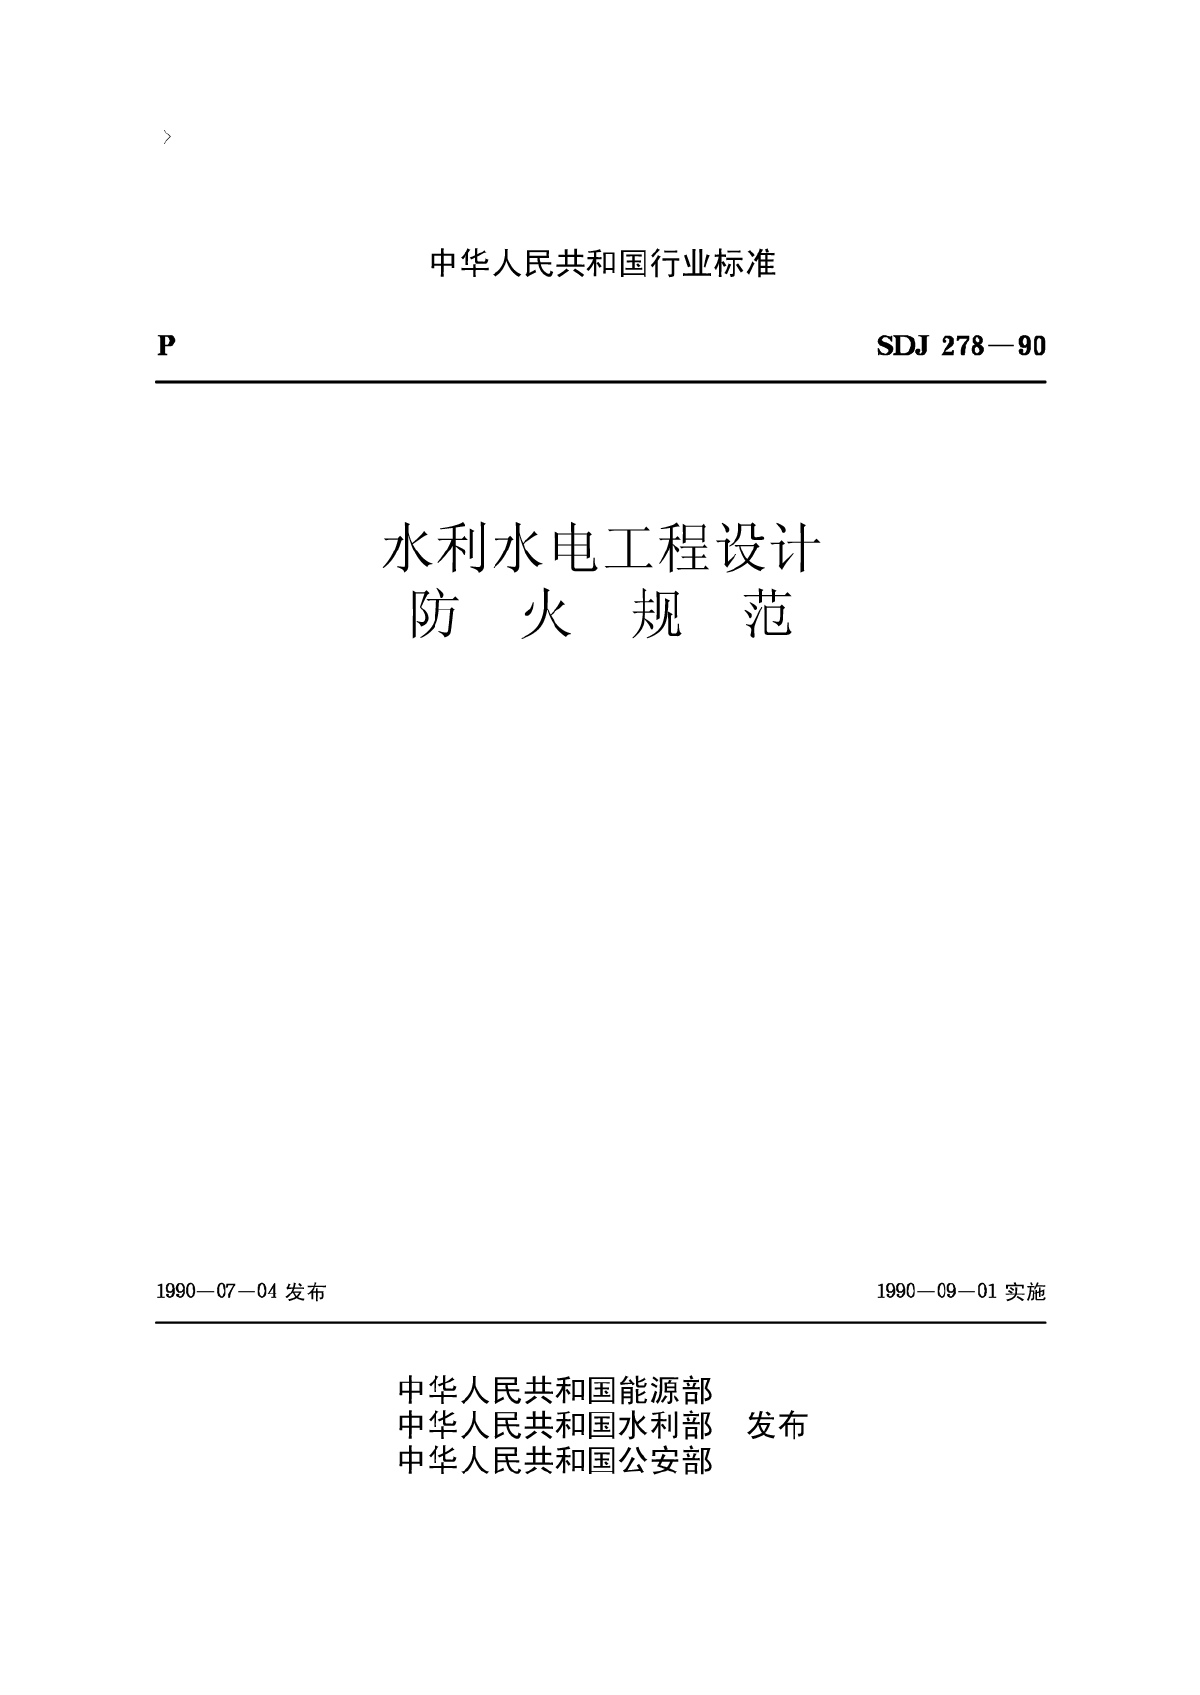 SDJ278-1990 水利水电工程设计防火规范.pdf